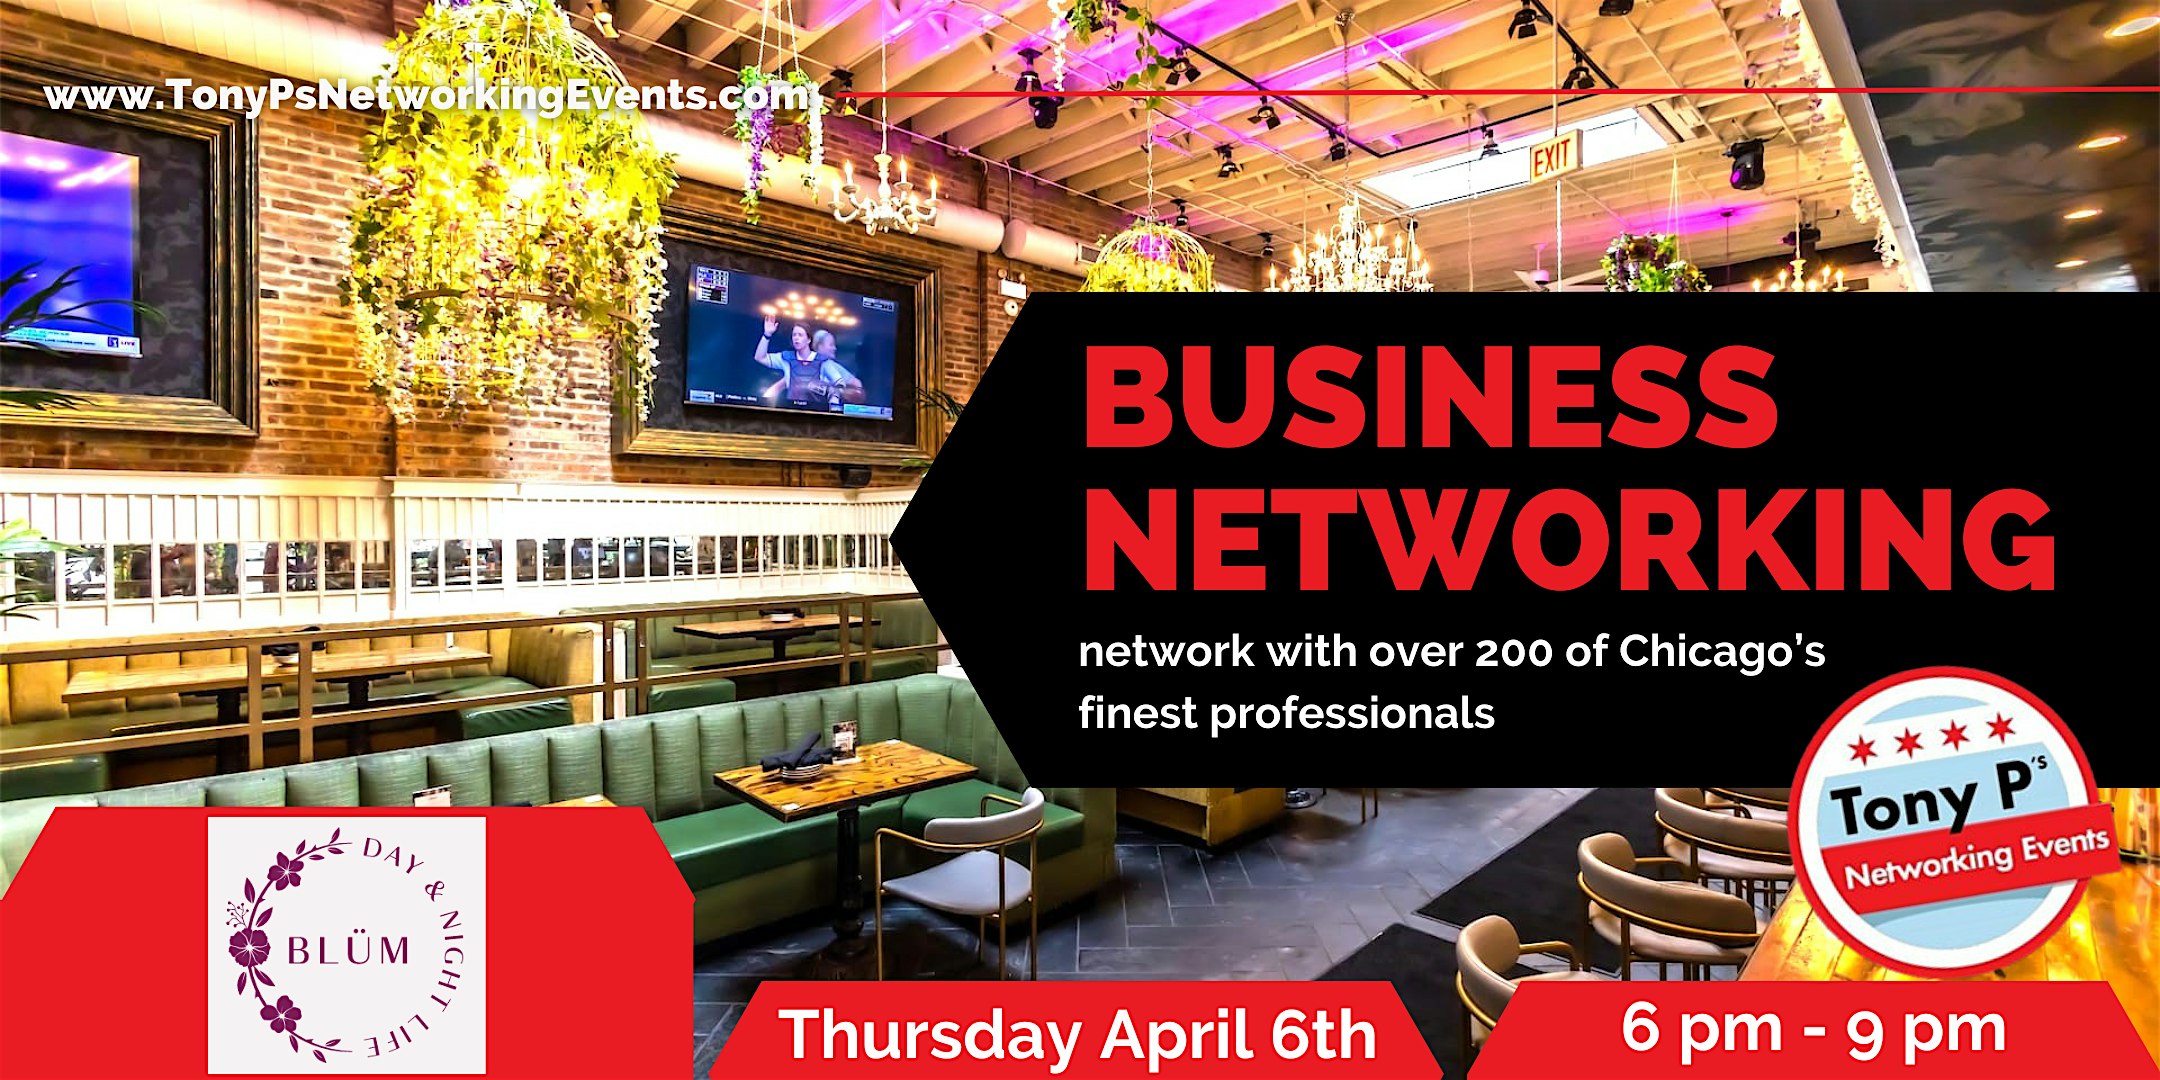 Tony P’s Business Networking Event at Blüm – Thursday April 6th